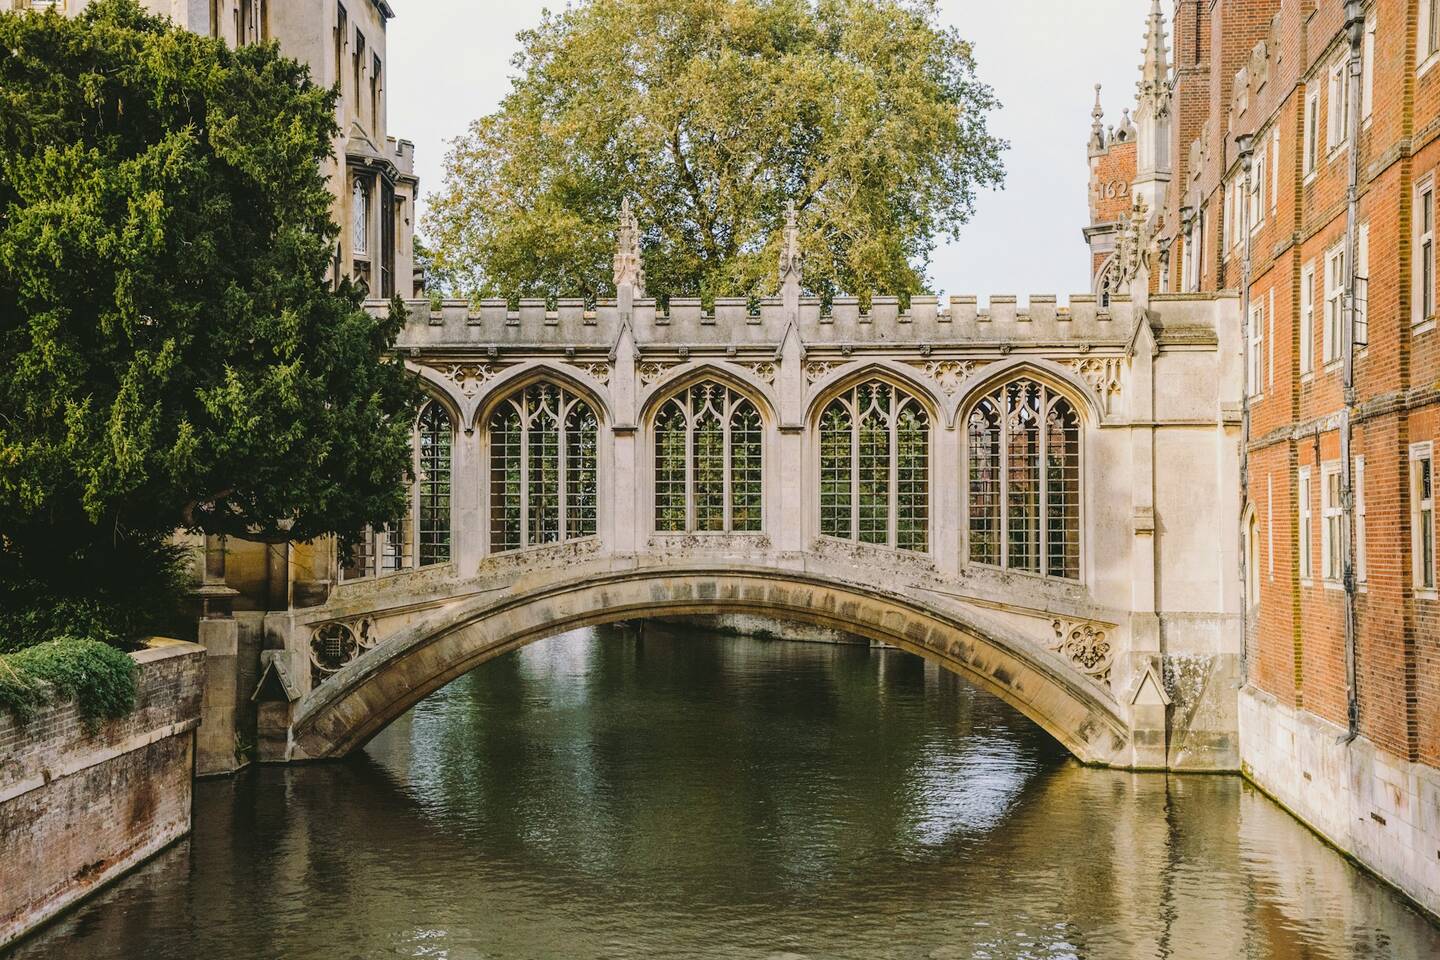 Bridge of Sighs, Cambridge